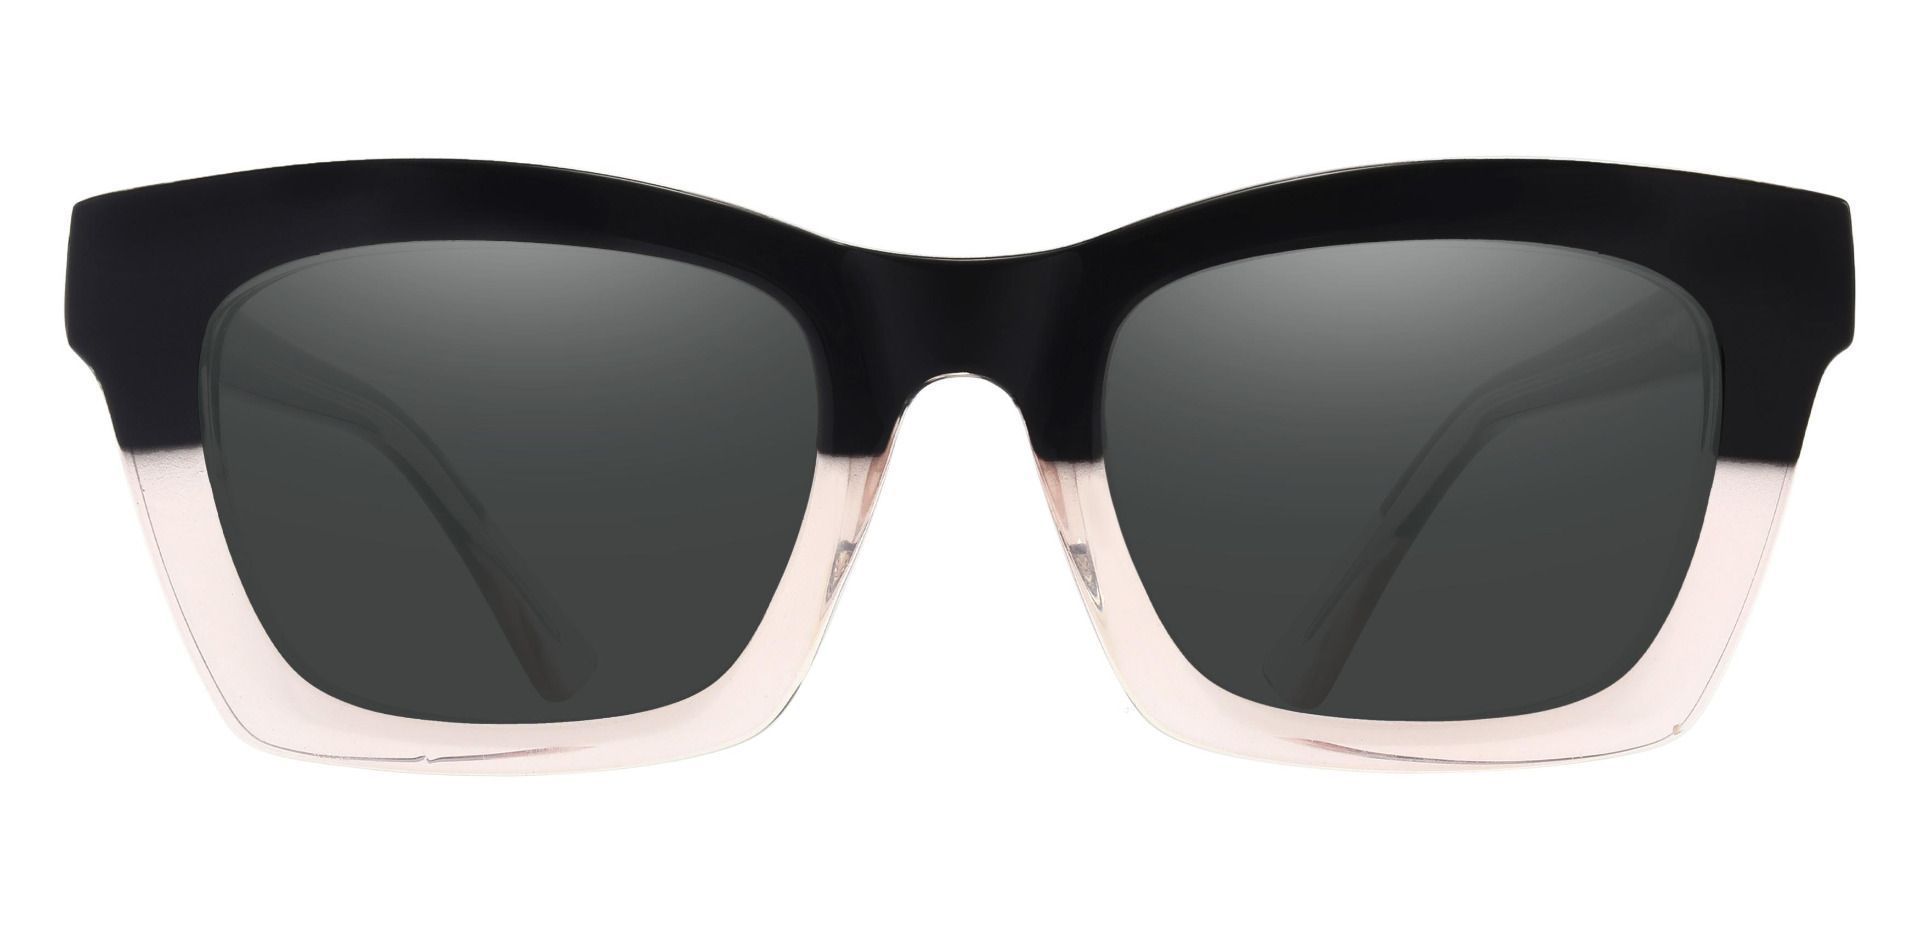 McKee Rectangle Prescription Sunglasses - Black Frame With Gray Lenses